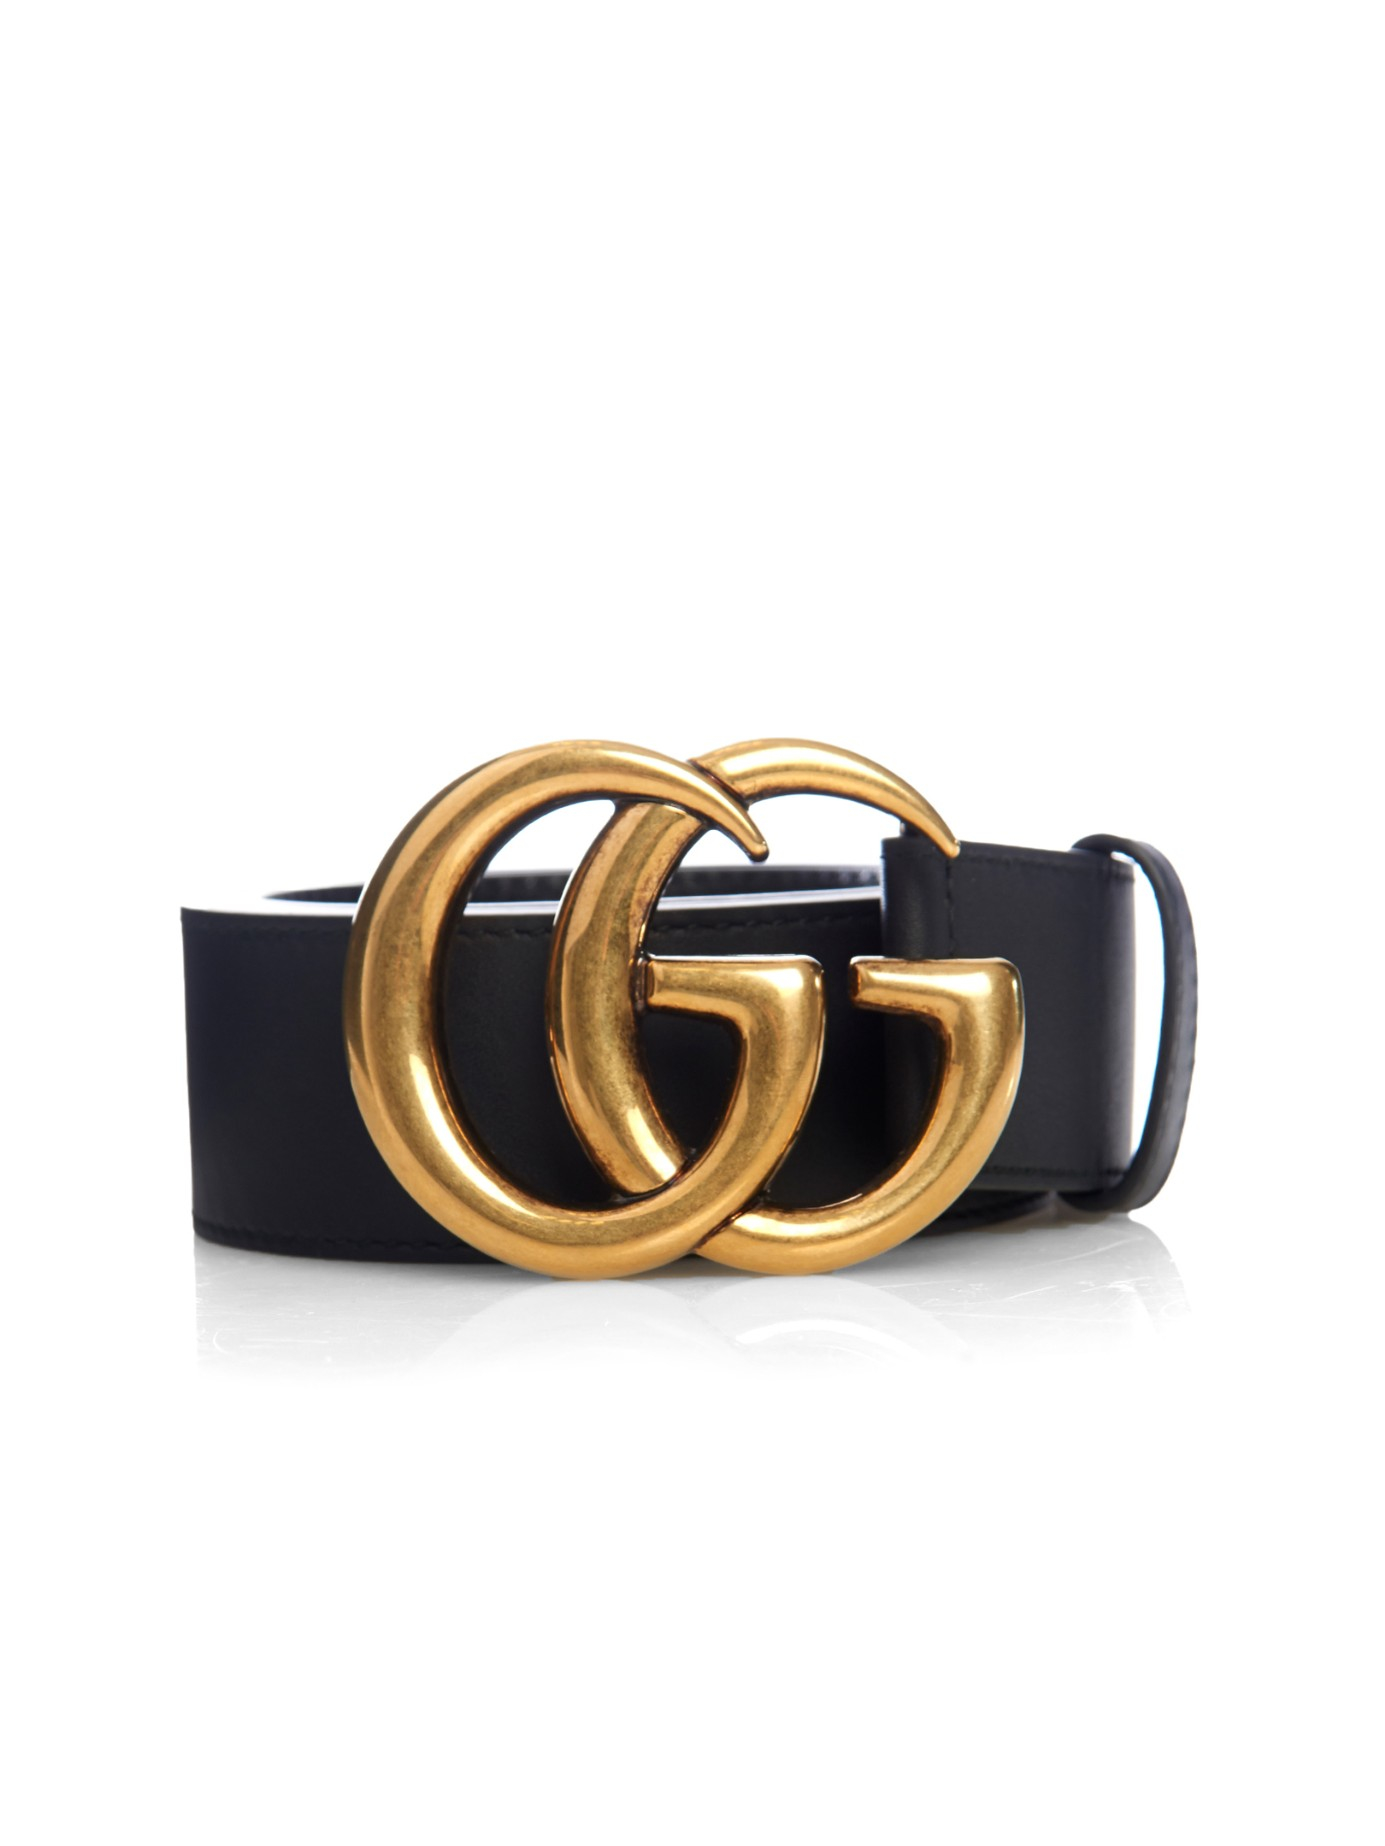 Lyst - Gucci Gg-Logo Leather Belt in Black